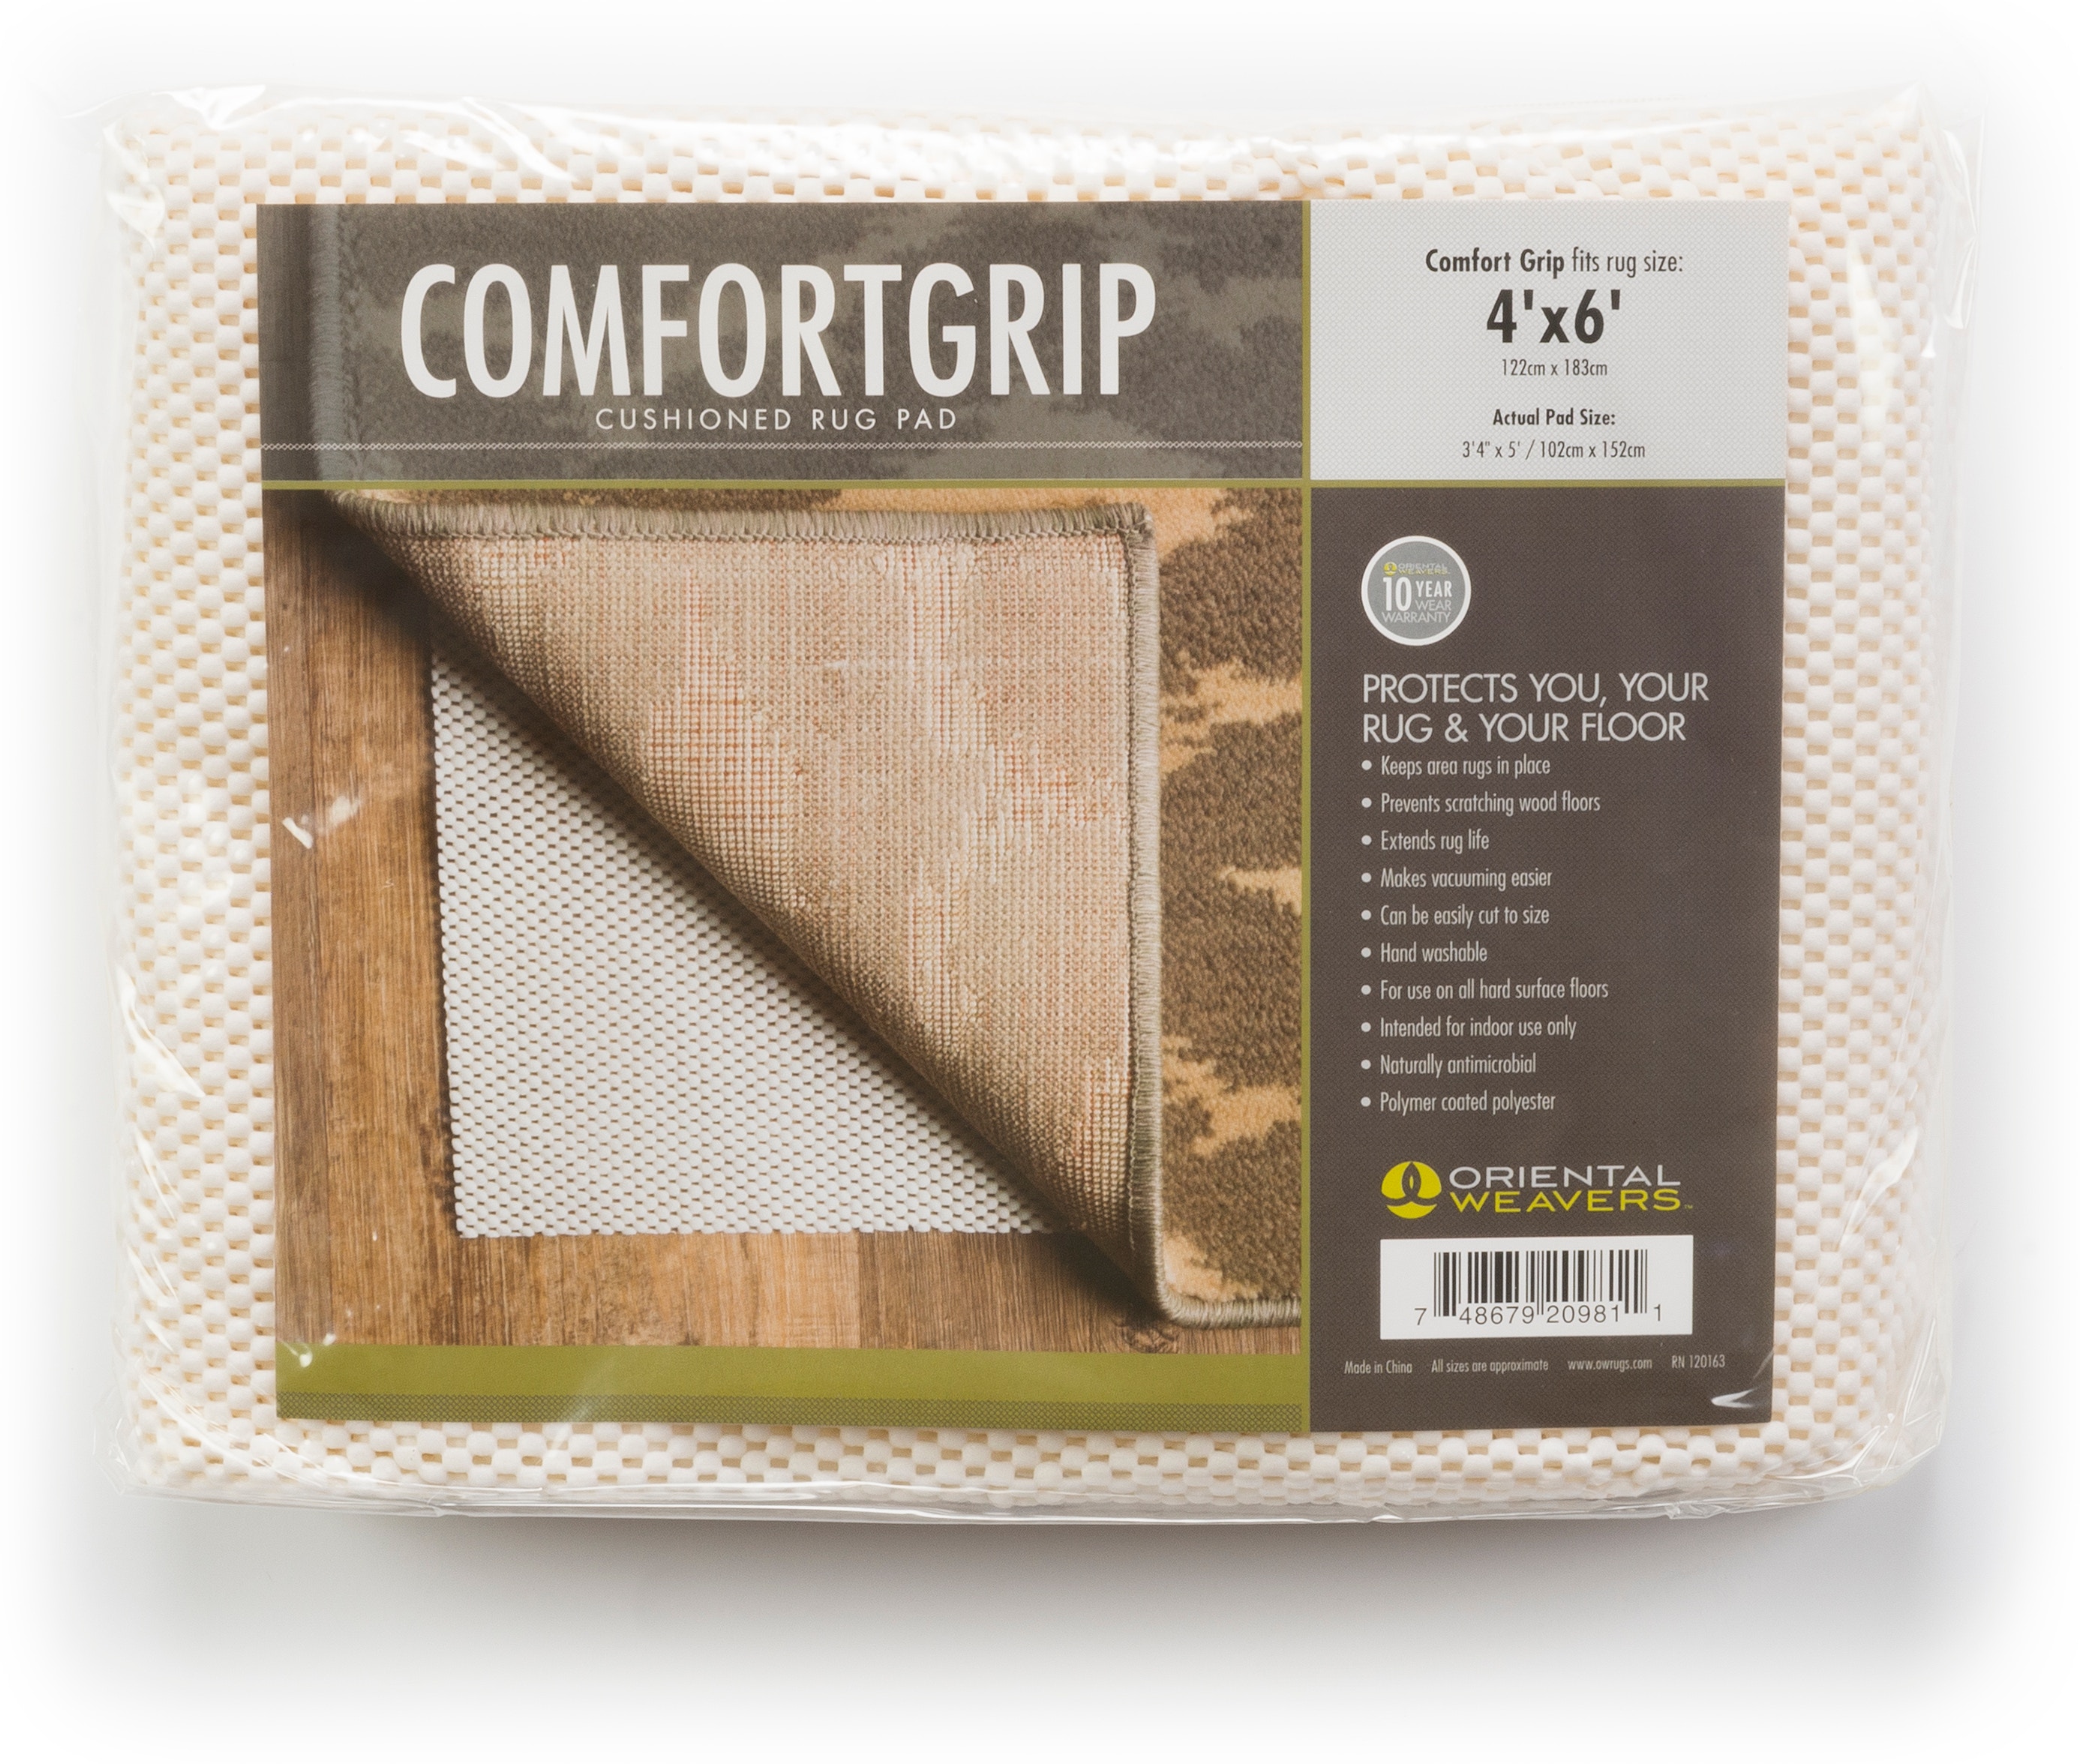 Comfort Grip 4x6 Rug Pad